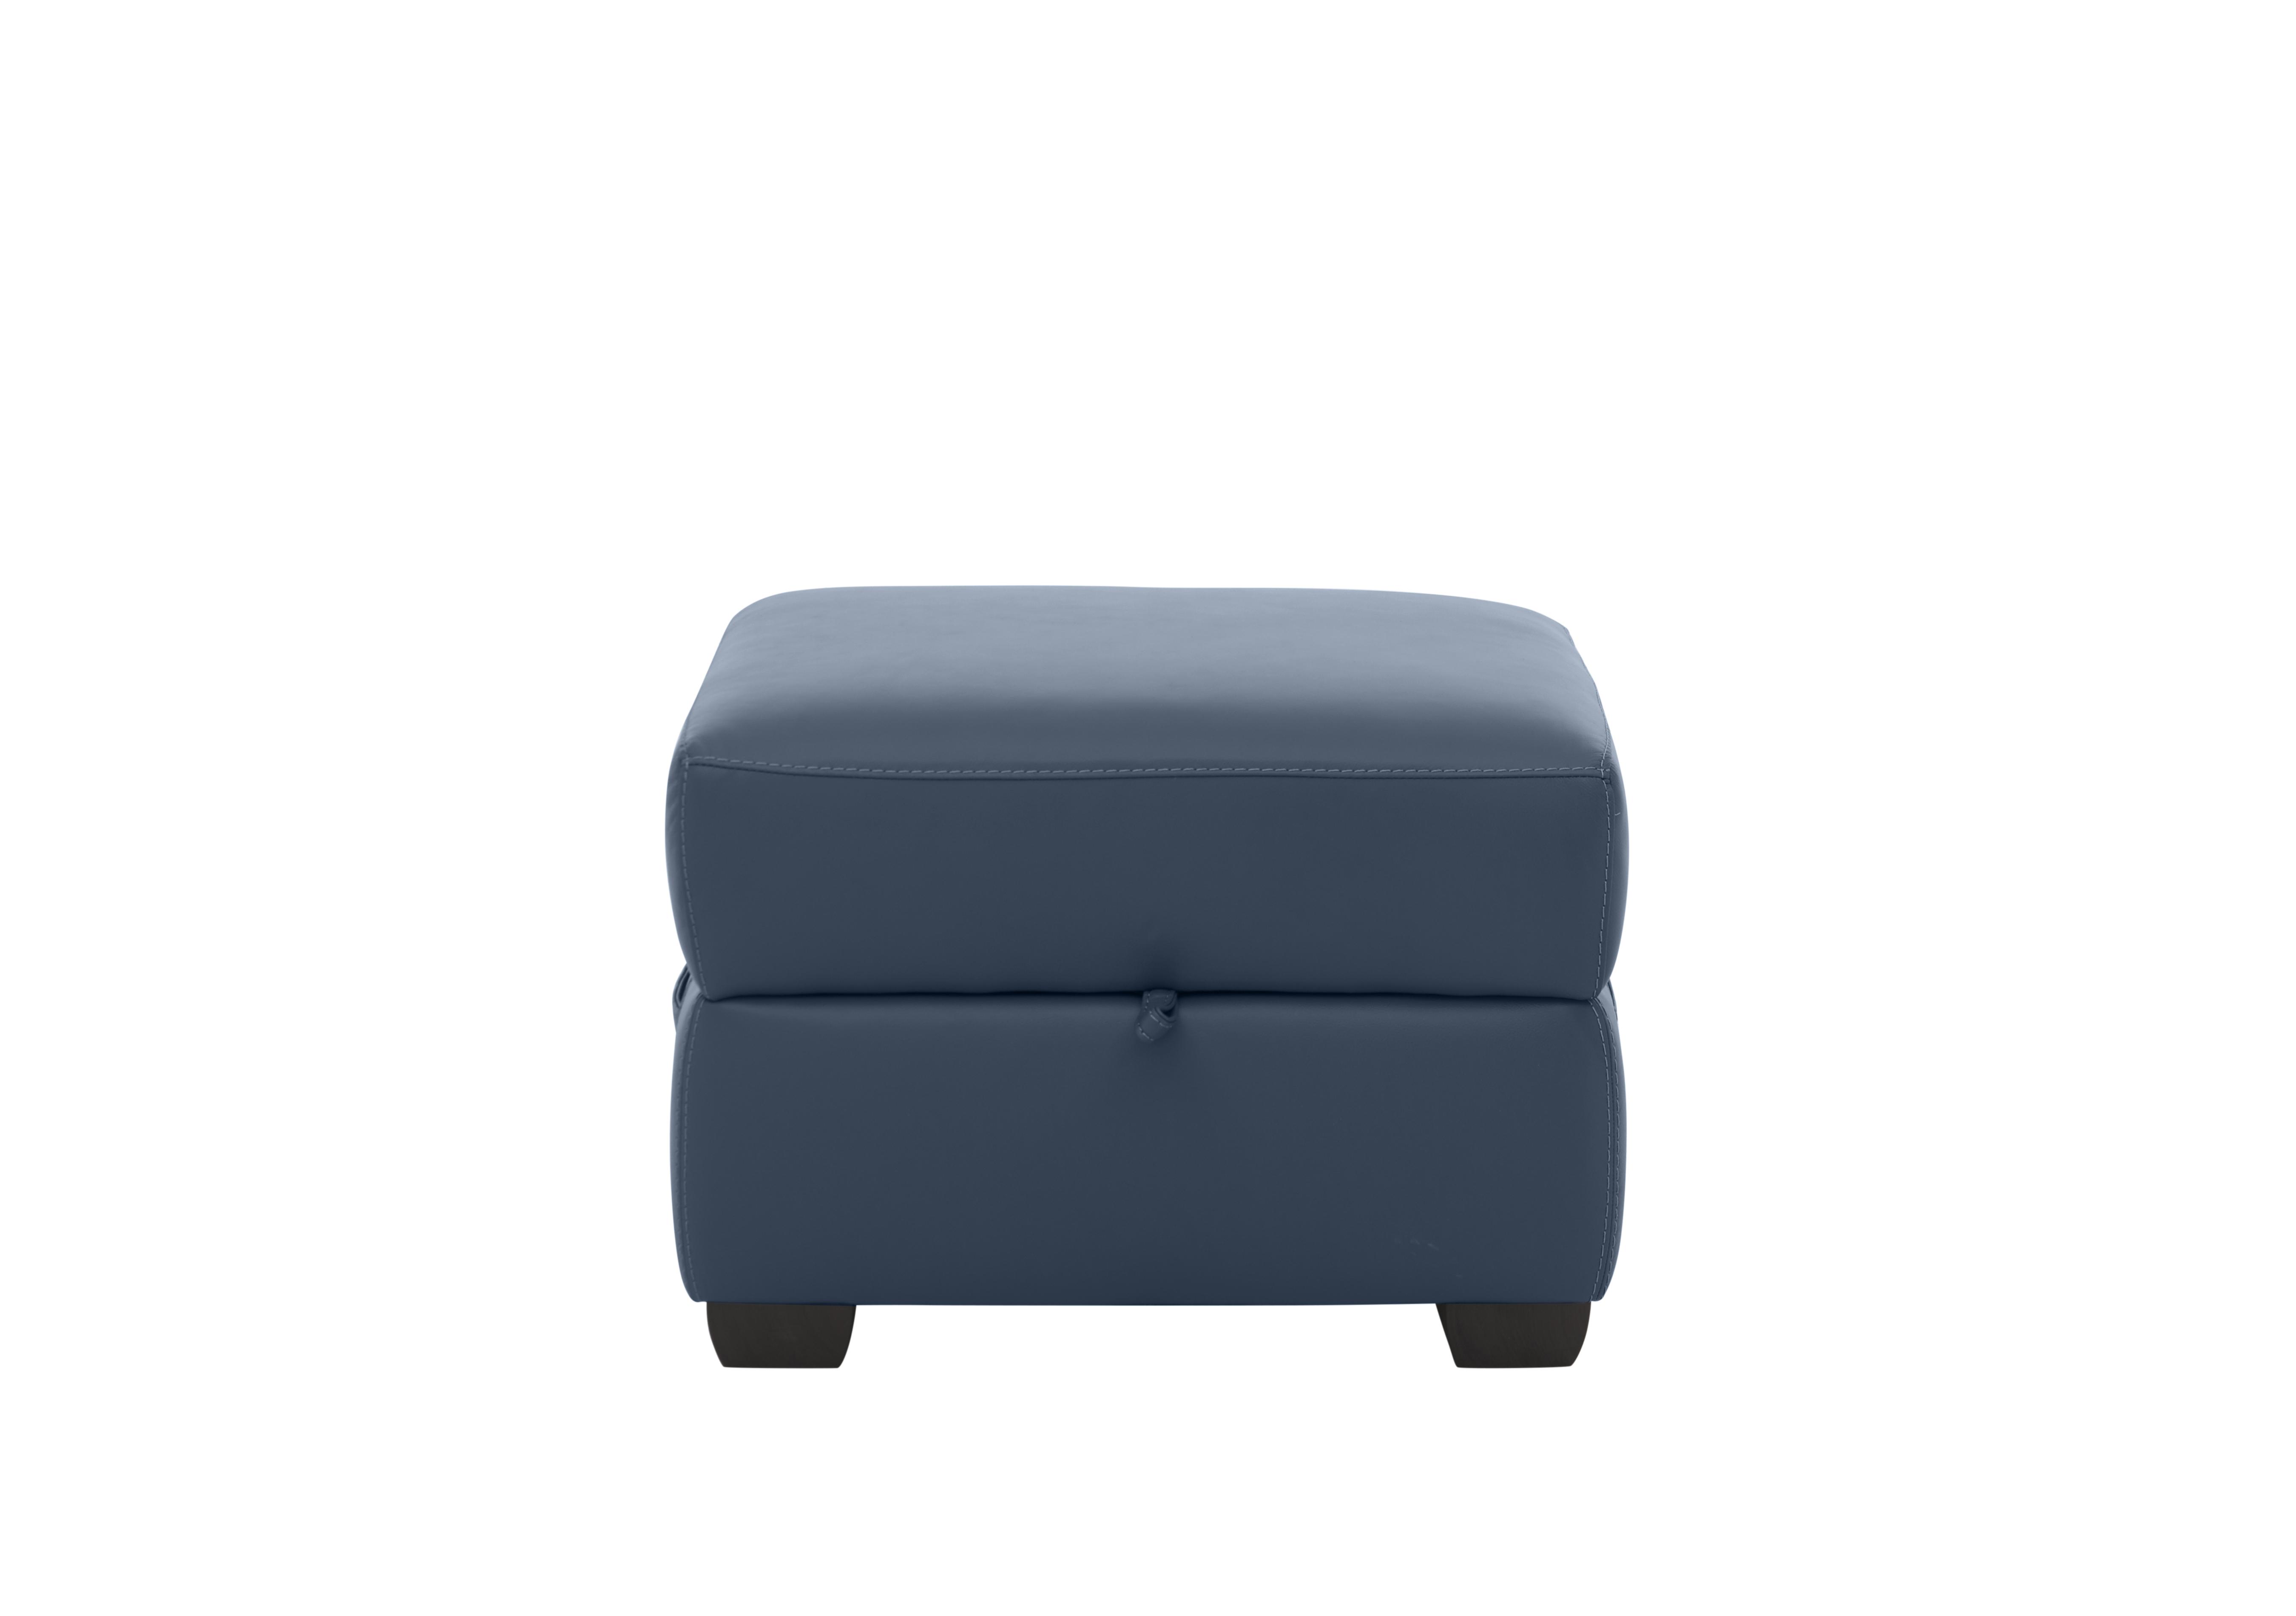 Missouri Leather Storage Footstool in Bv-313e Ocean Blue on Furniture Village